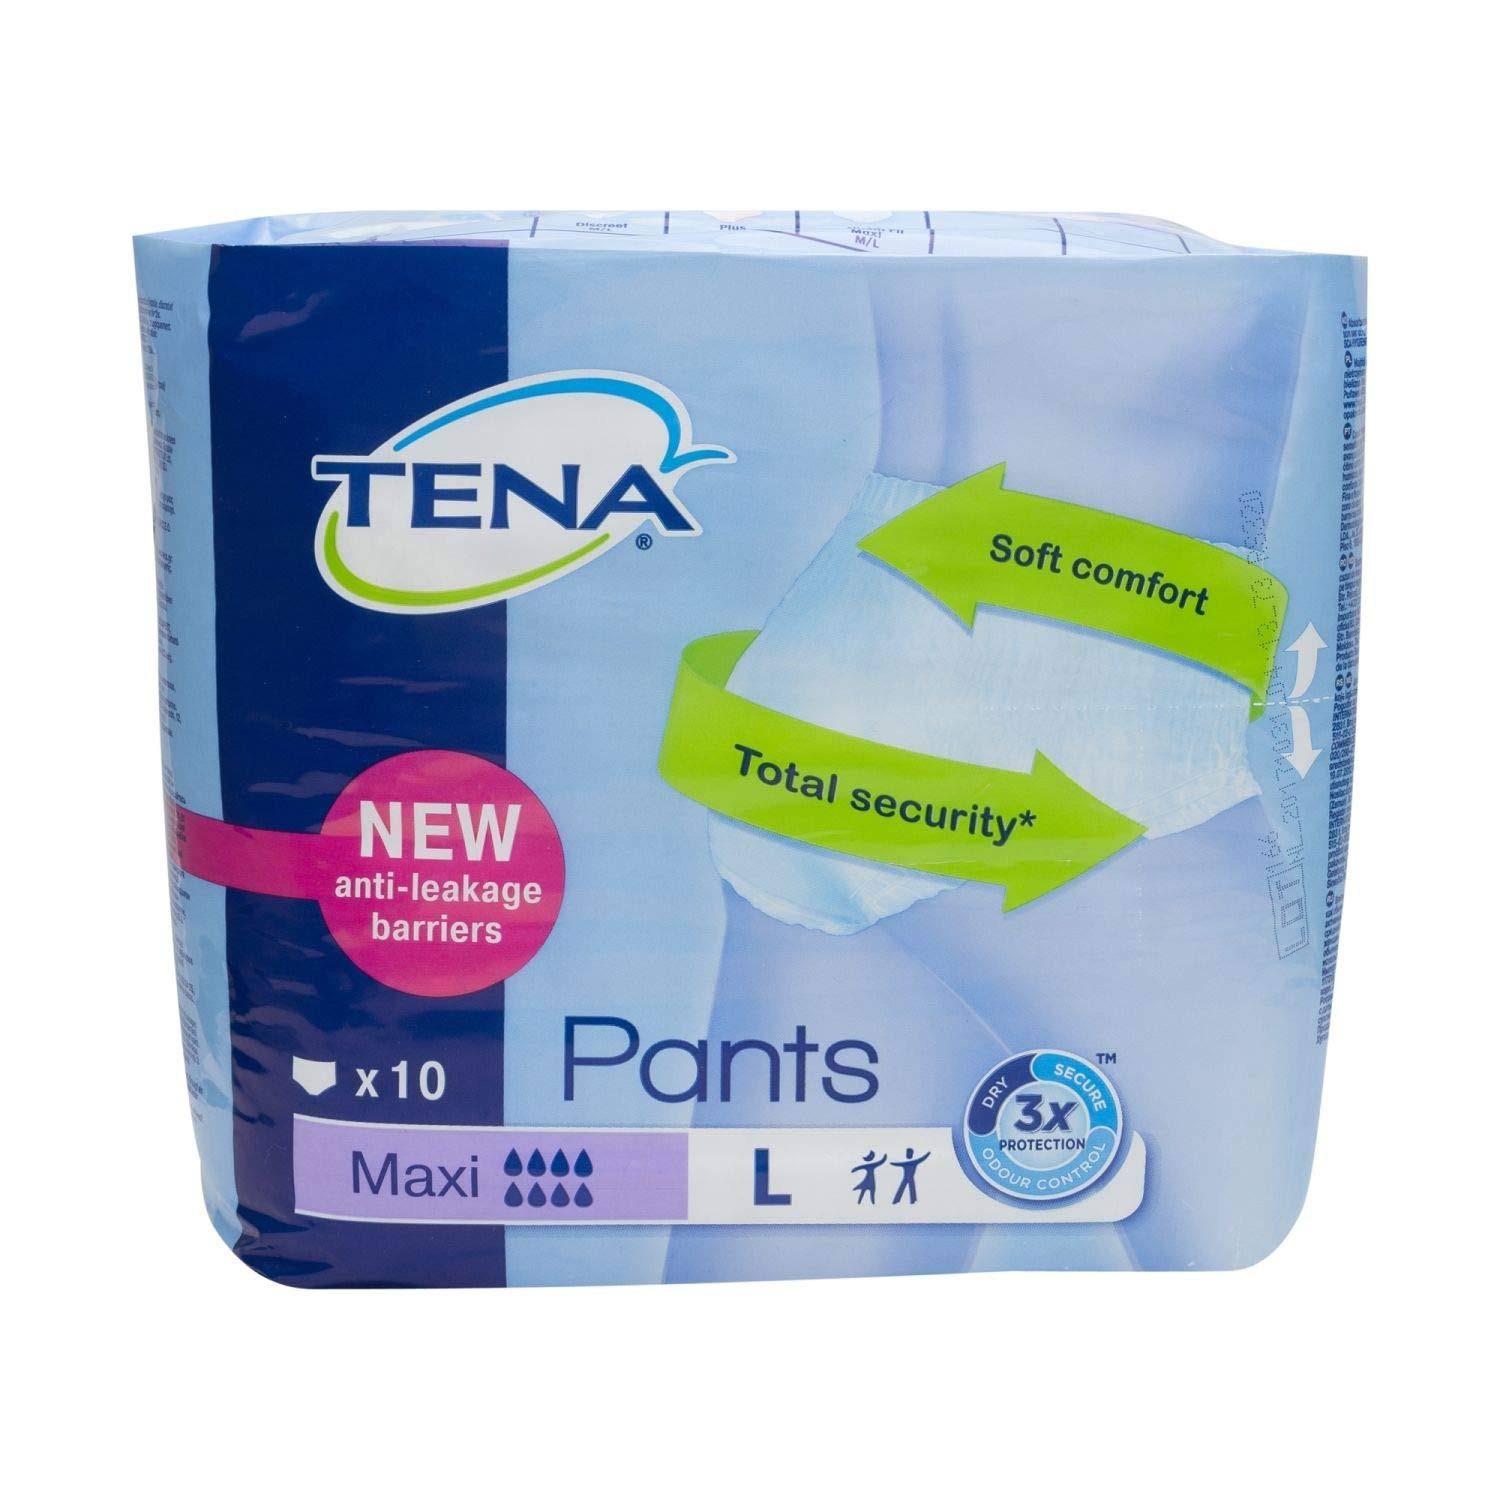 TENA Super 12 Pants - Large